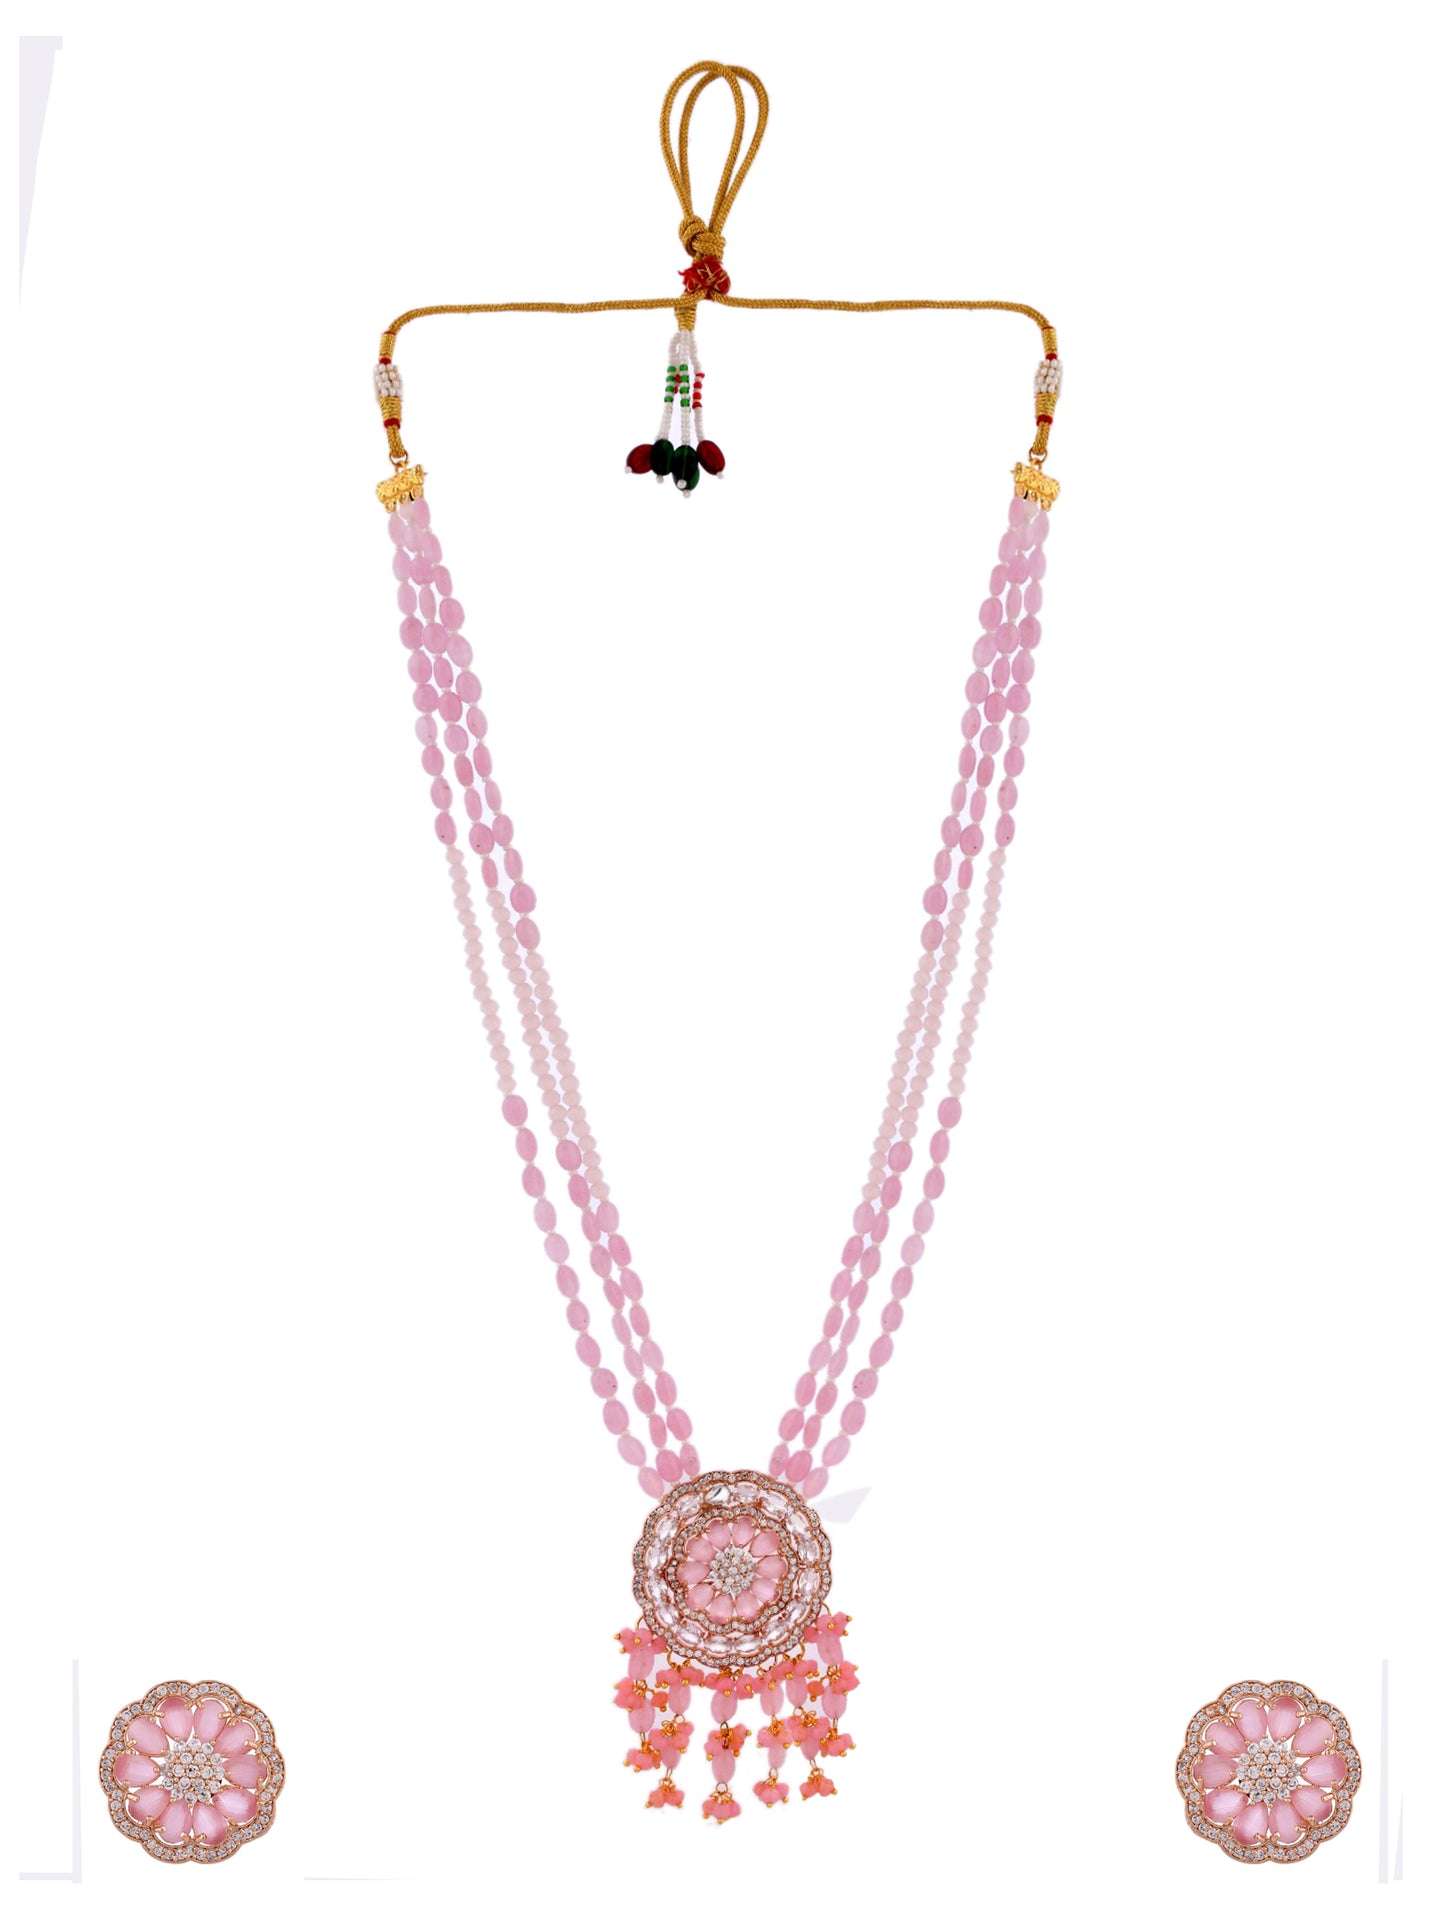 Tranding american diamond jewellery set with artificial beads